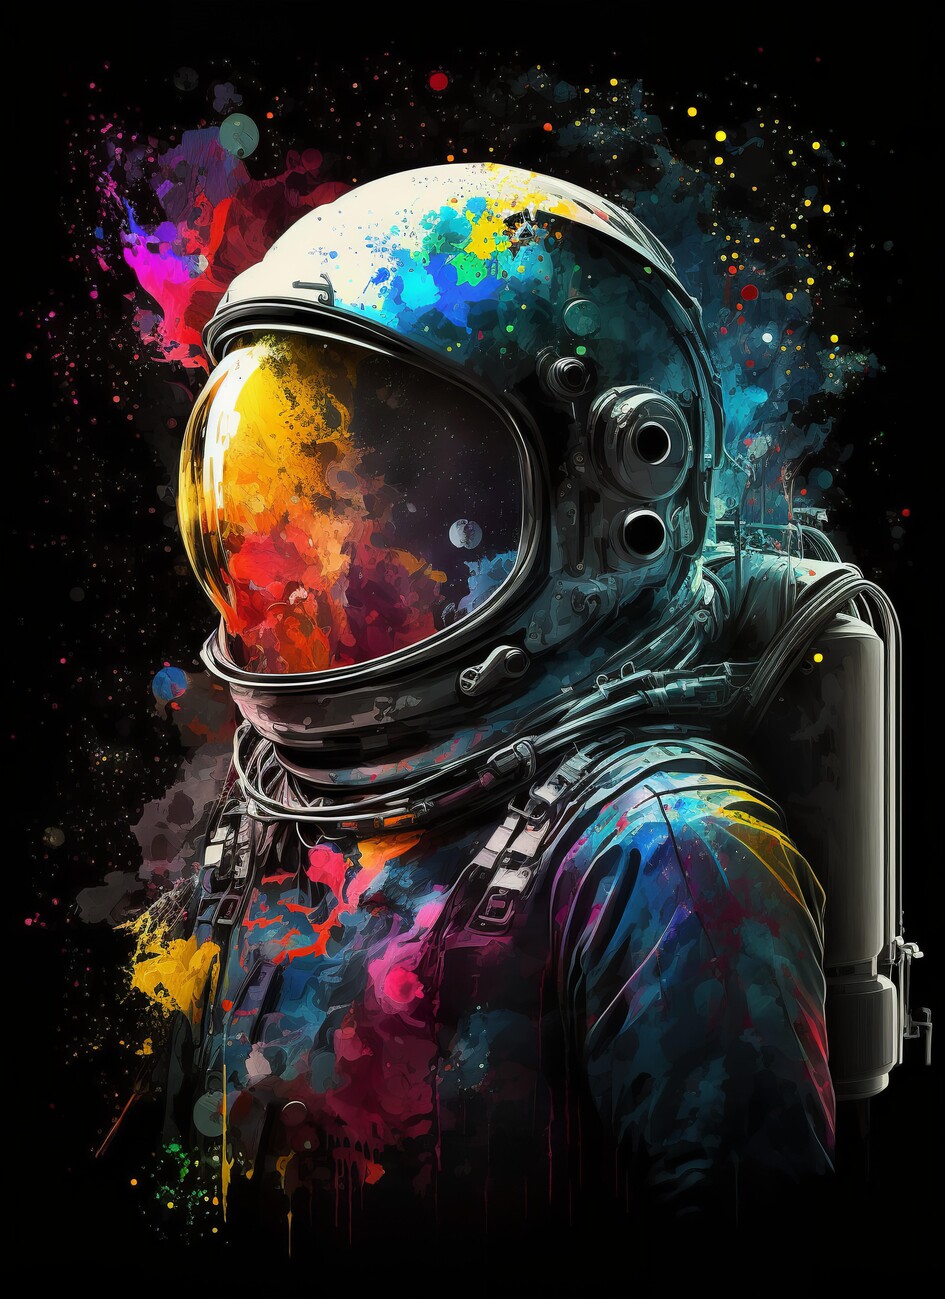 brand new astronaut wallpaper